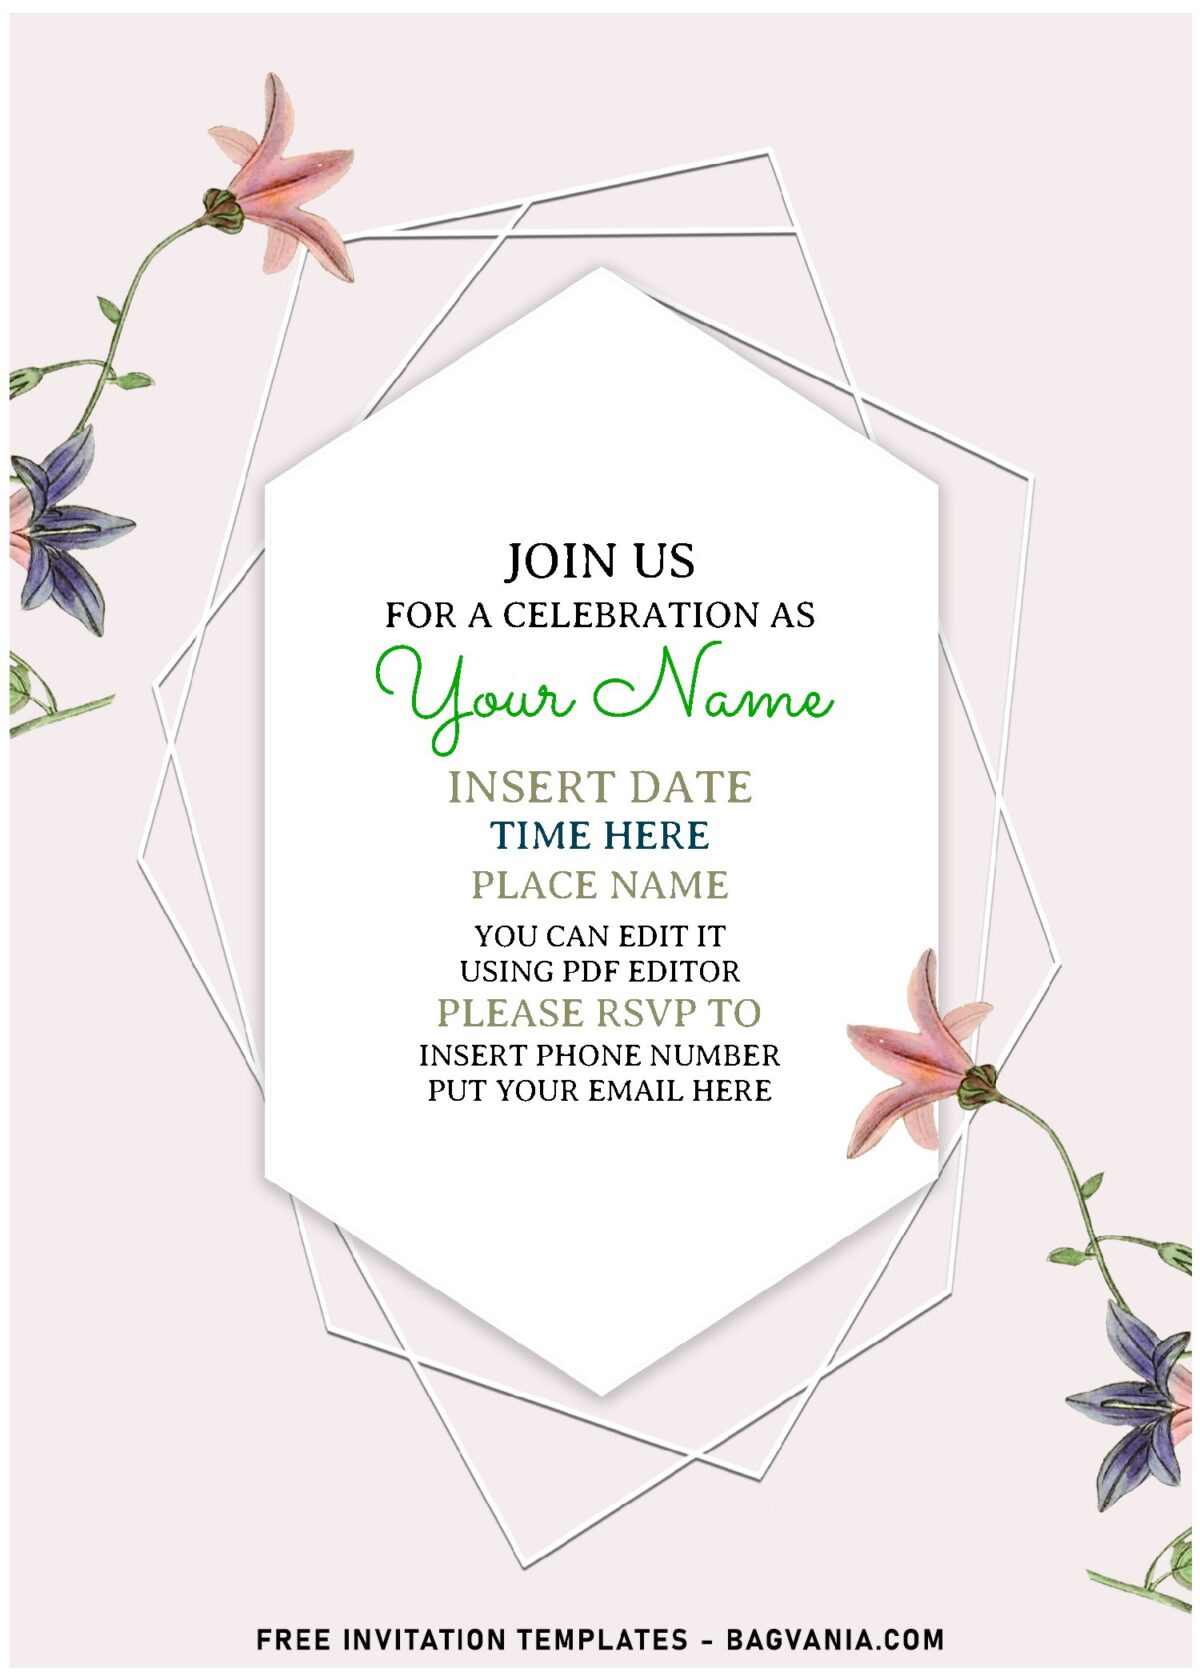 (Free Editable PDF) Geometric Autumn Anemone & Stargazer Lily Floral Invitation Templates with modern geometric frame